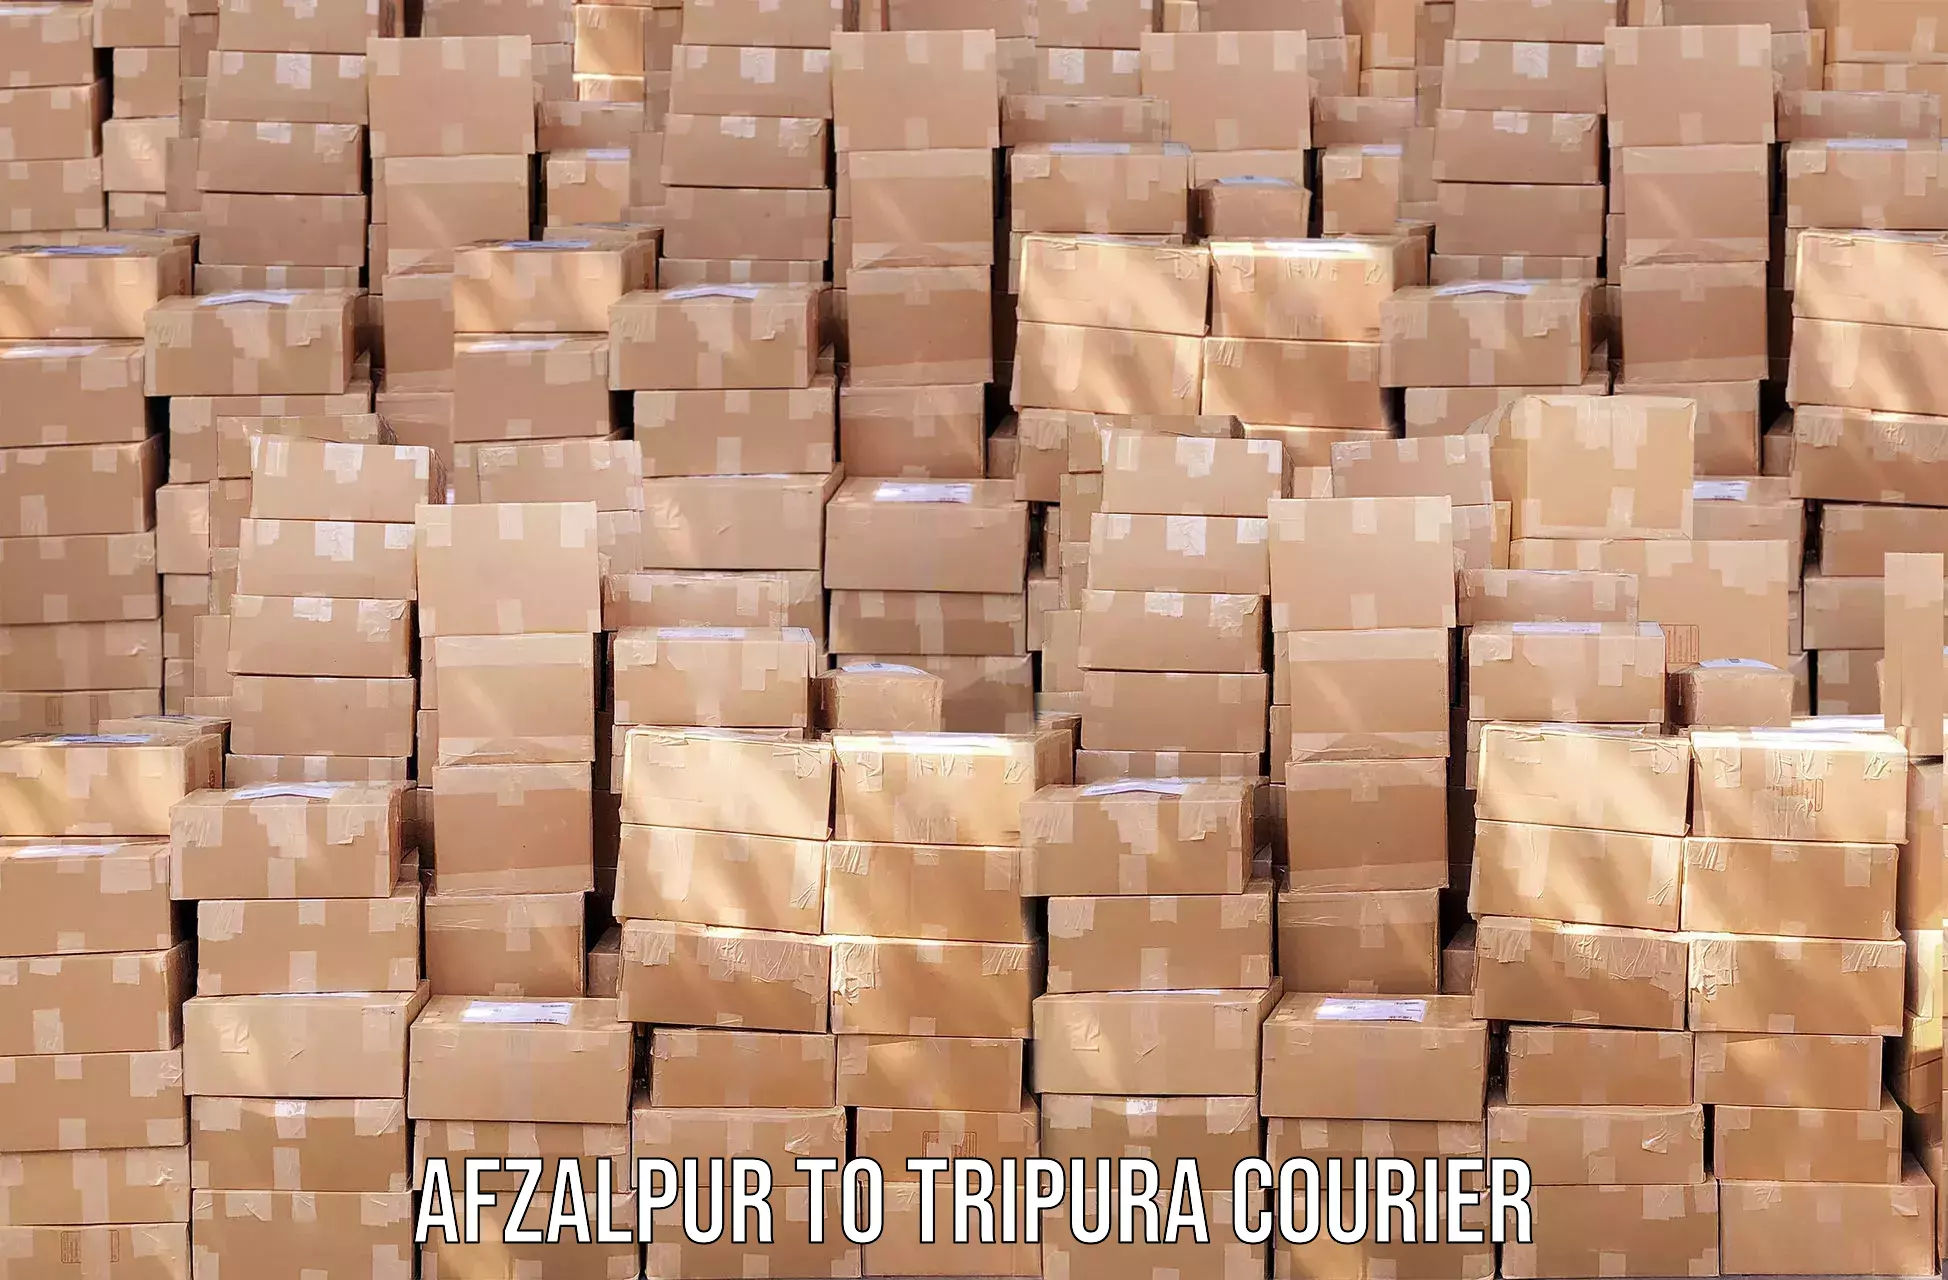 Digital courier platforms Afzalpur to Agartala